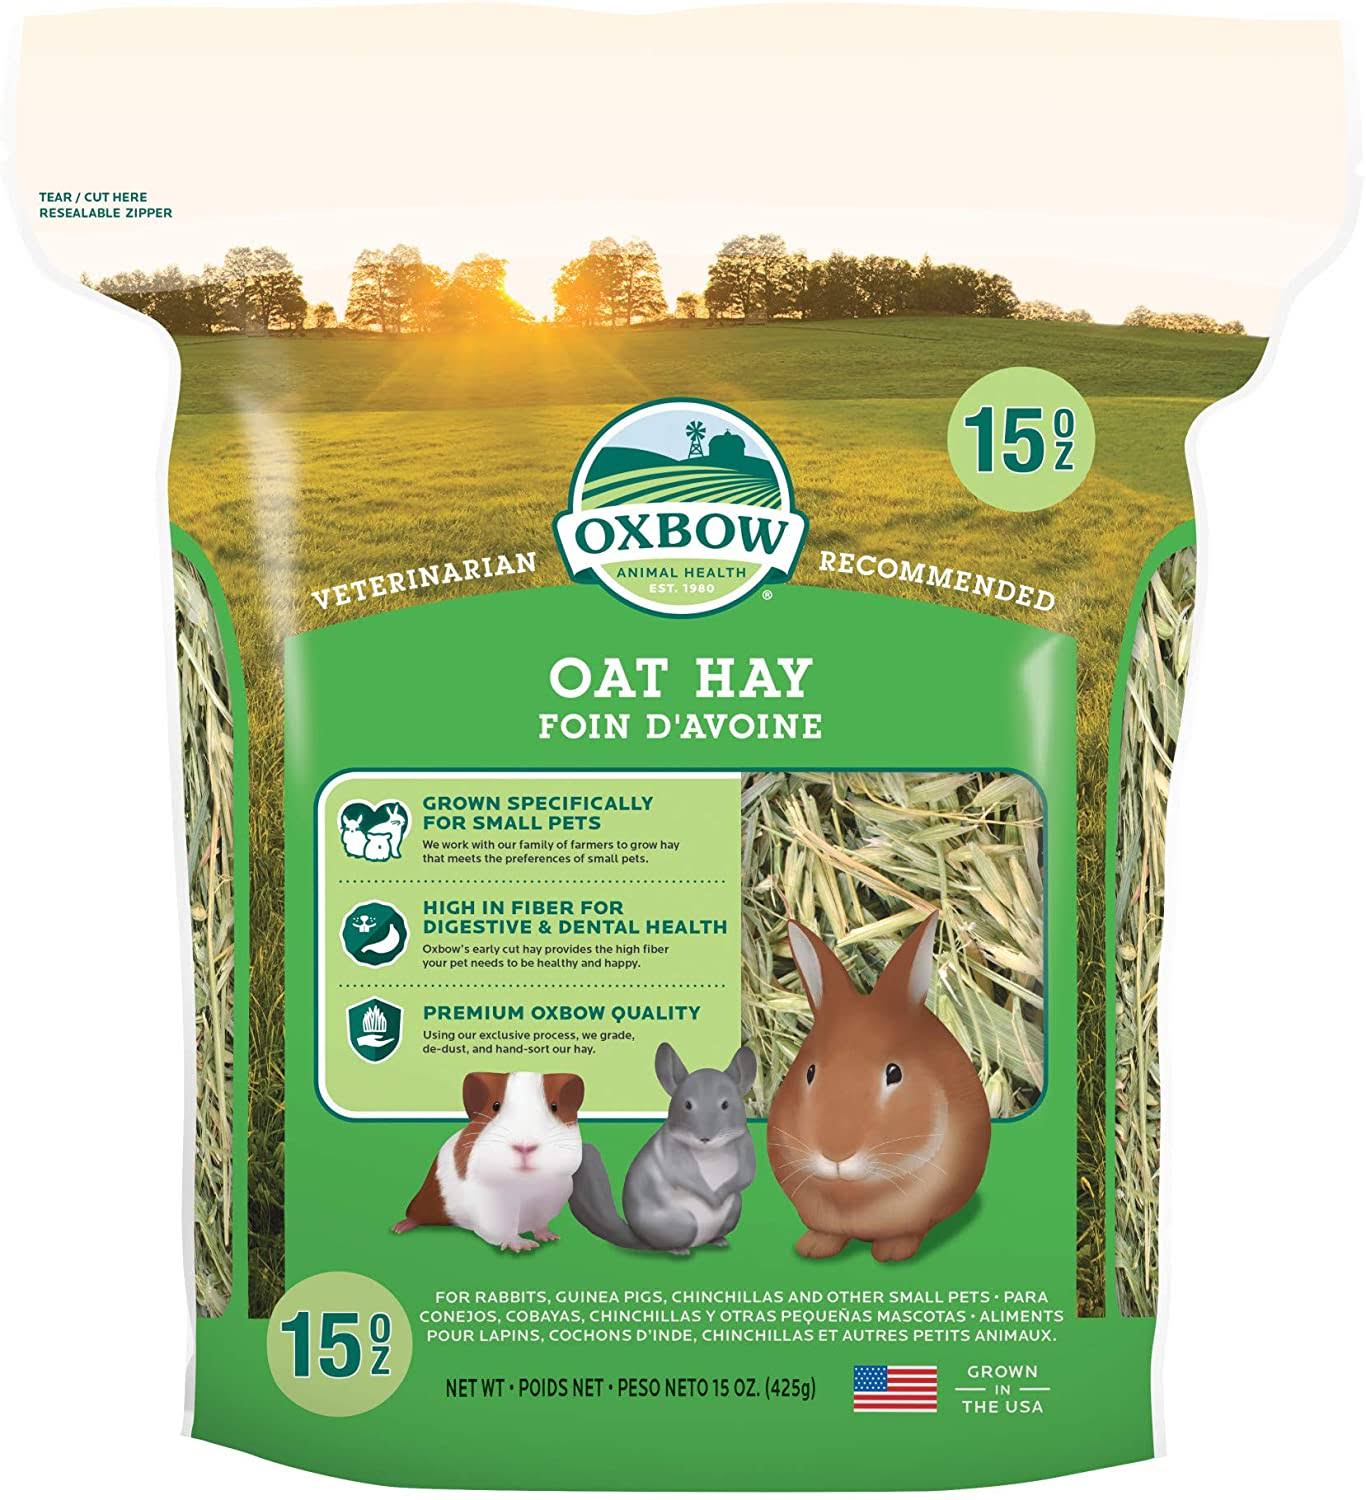 Oxbow Animal Health Oat Hay - 15 oz